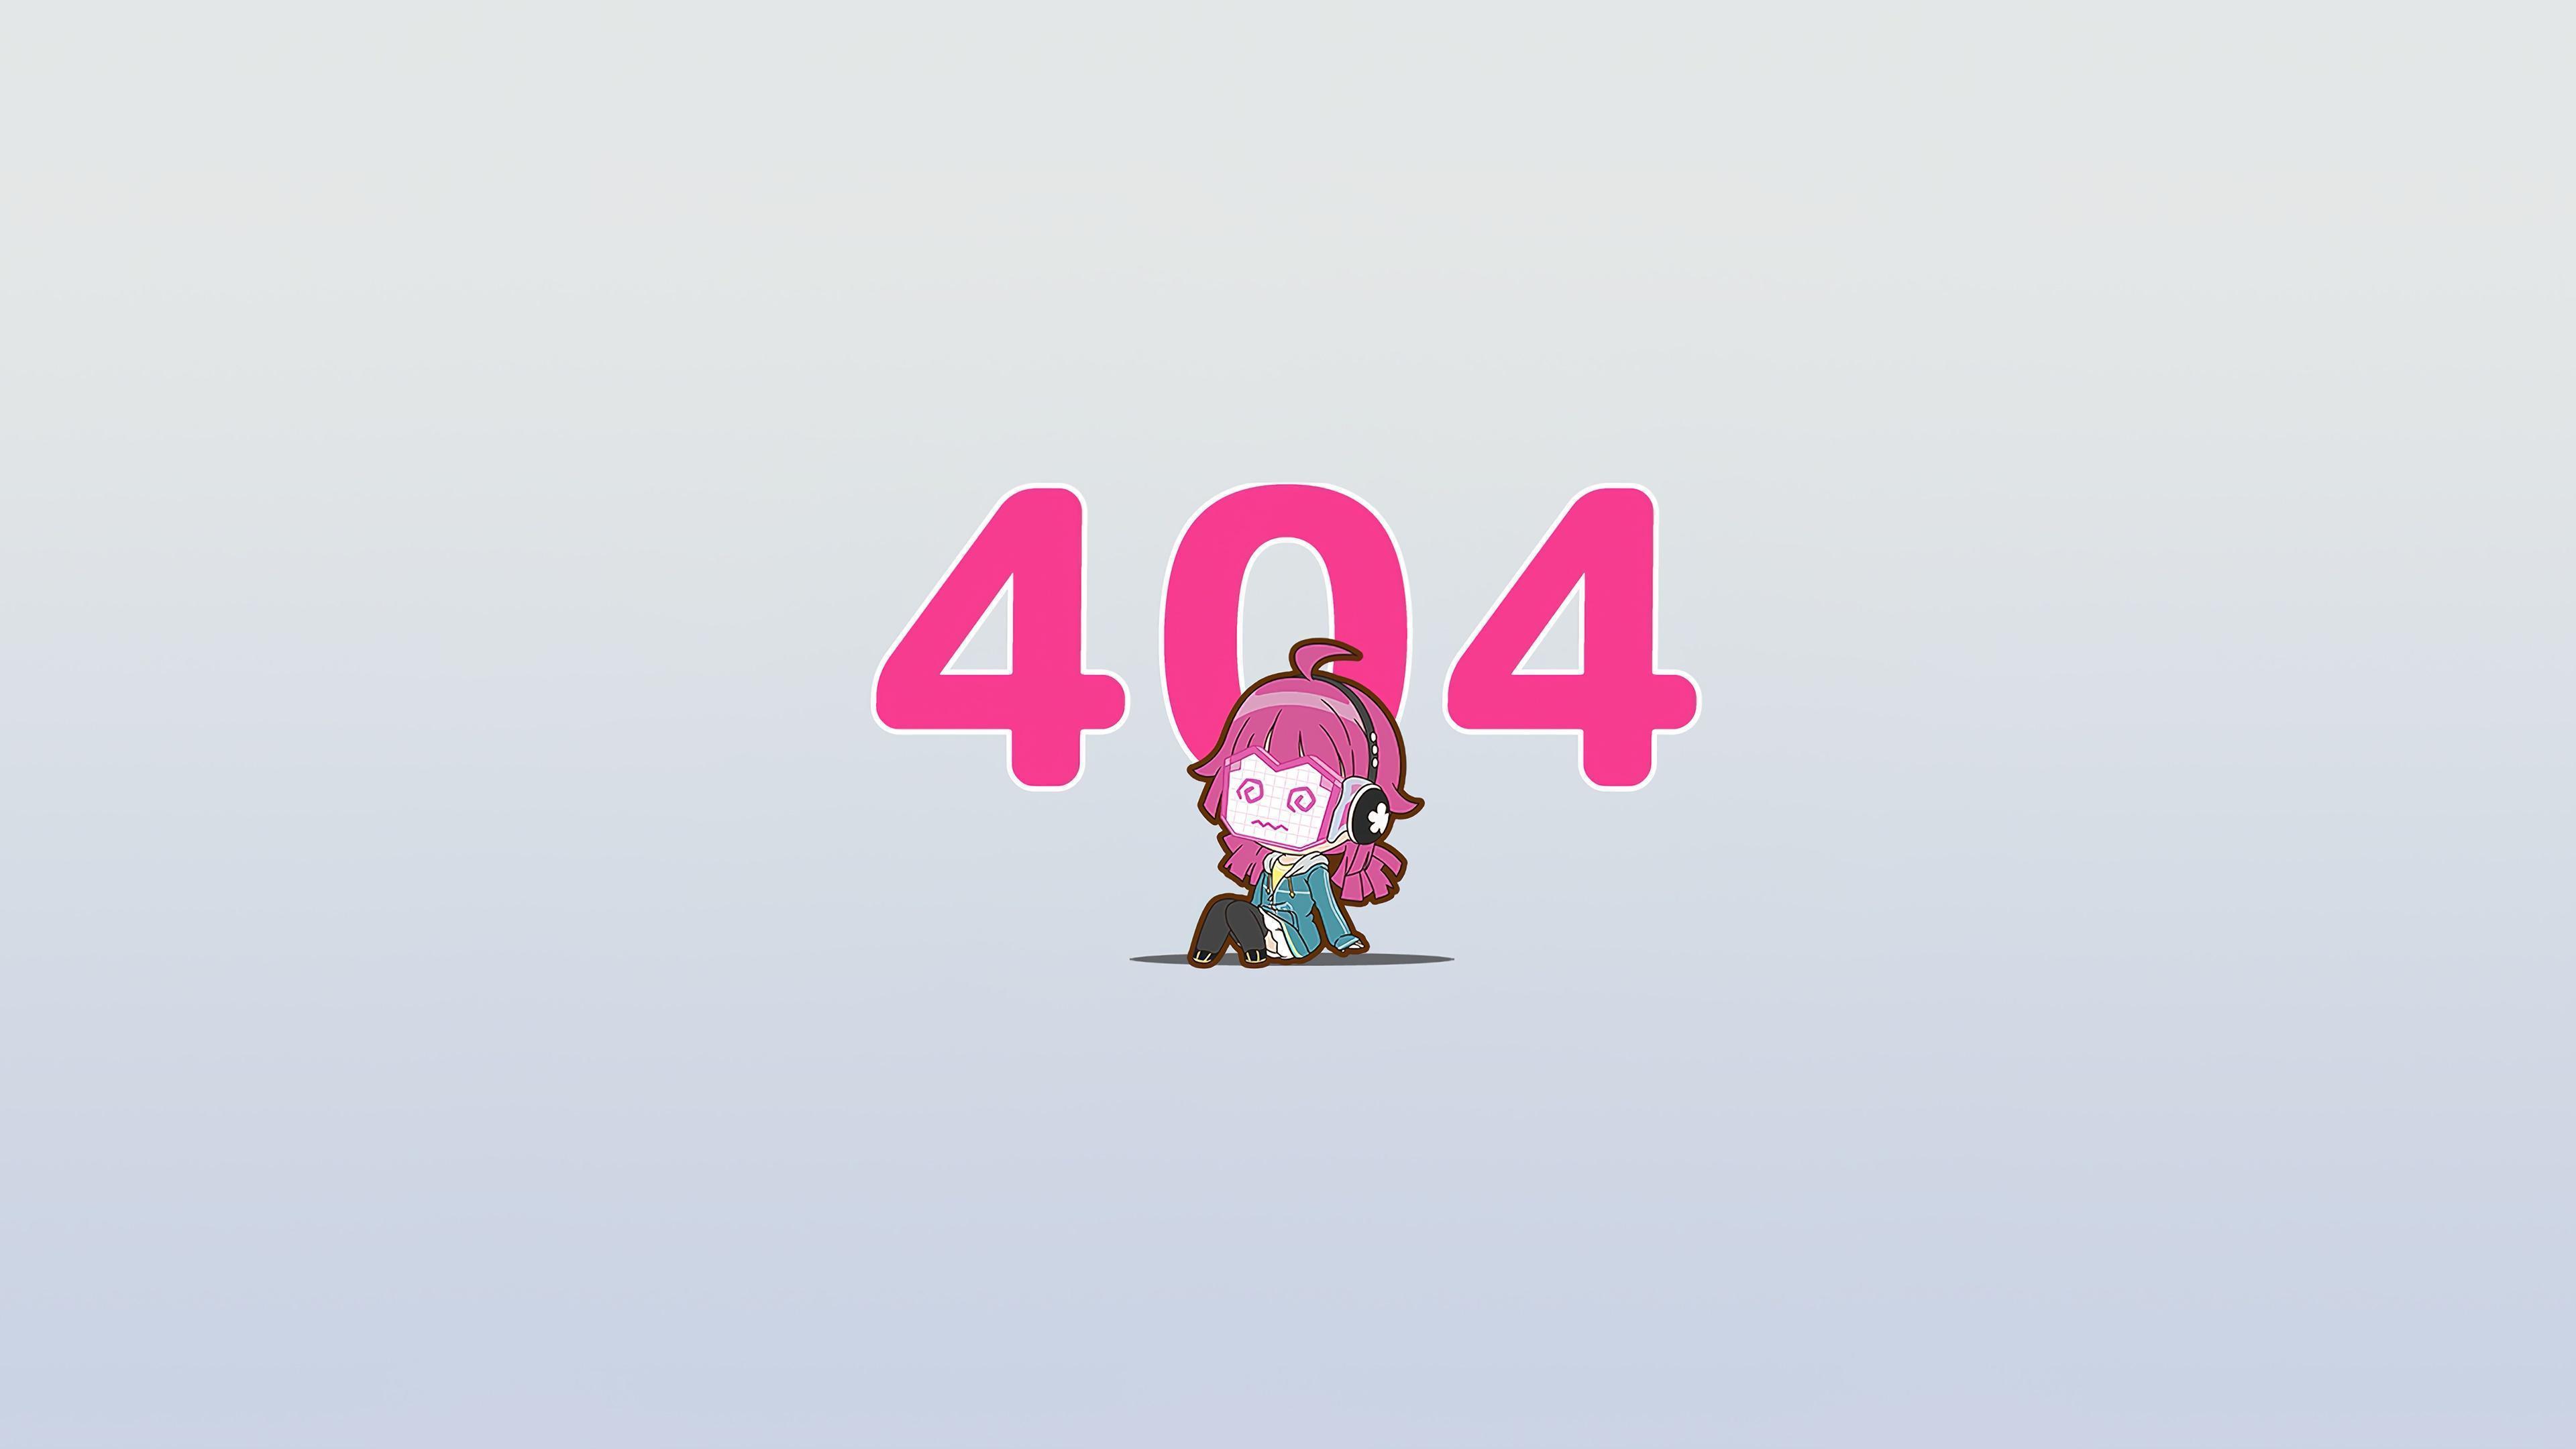 HD wallpaper, Hd, 4K, Wallpaper, 404, Anime, Error